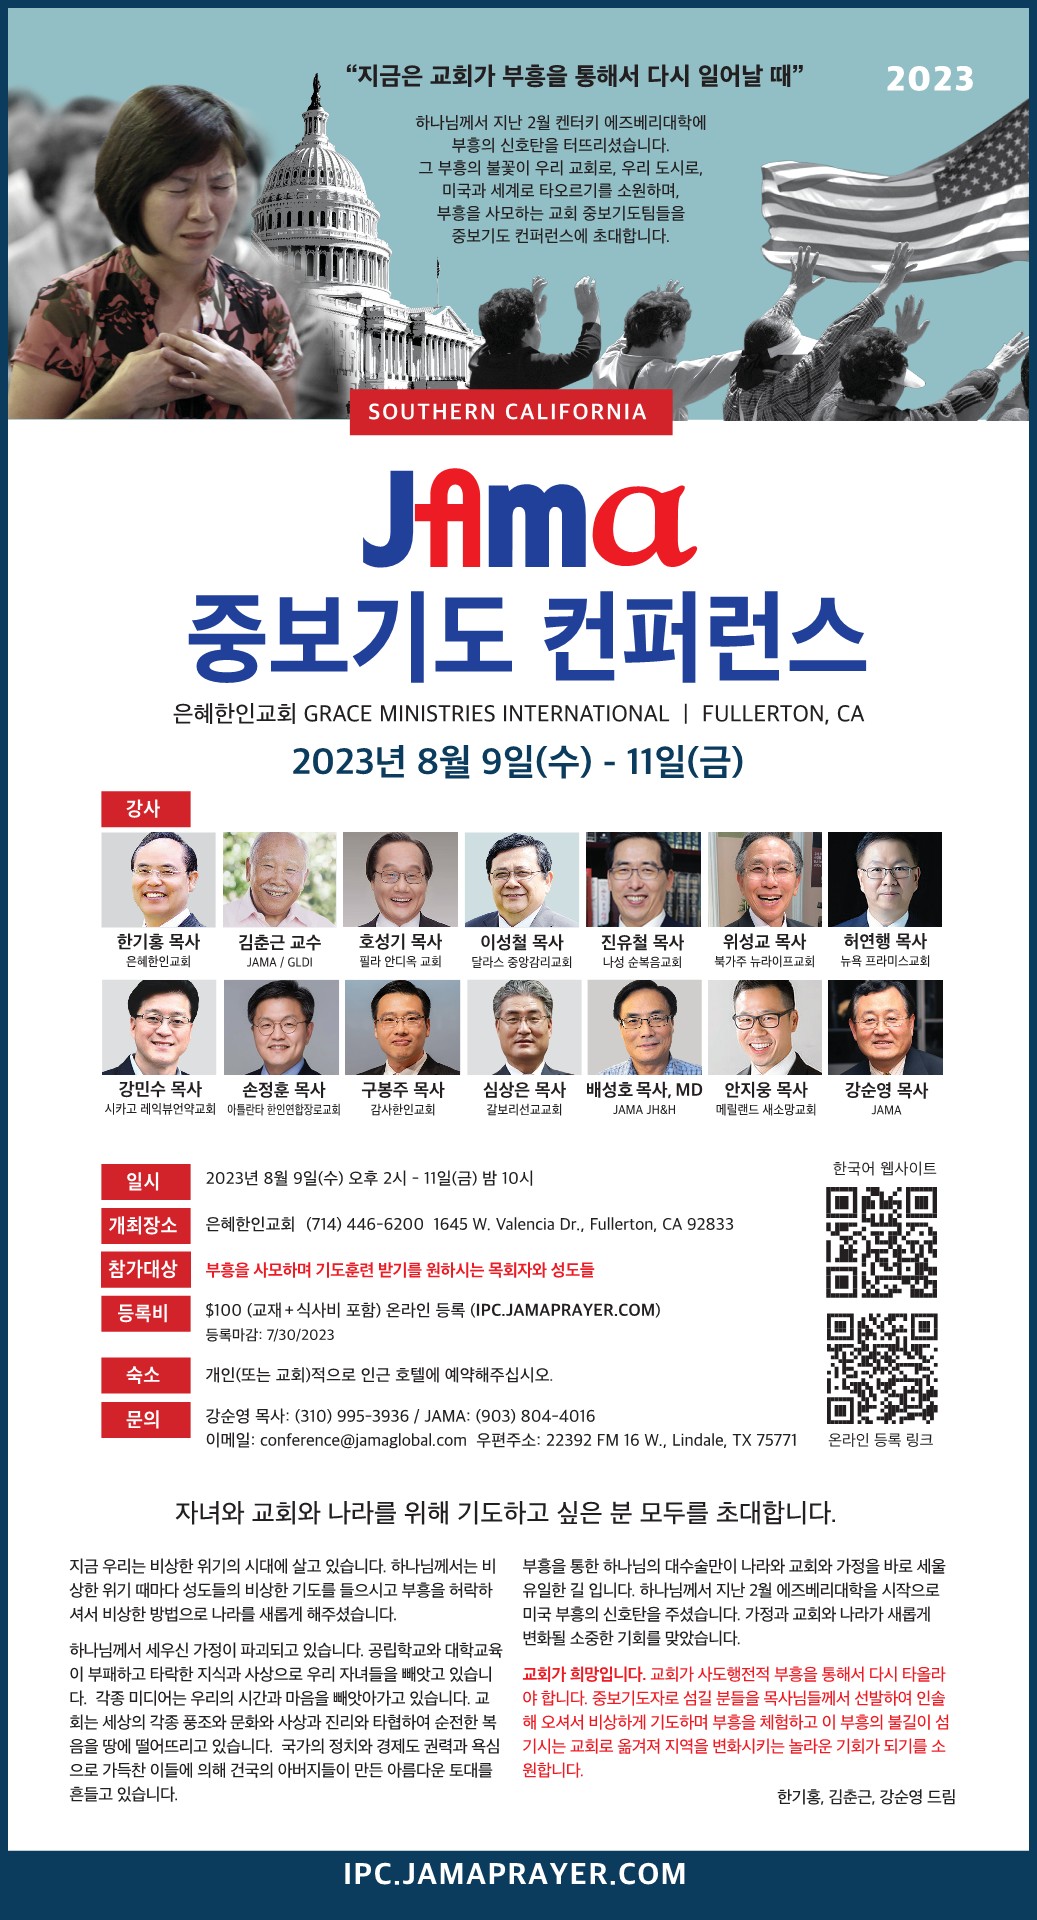 JAMA IPC 중보기도컨퍼런스 2023-신문광고 final_1.jpg